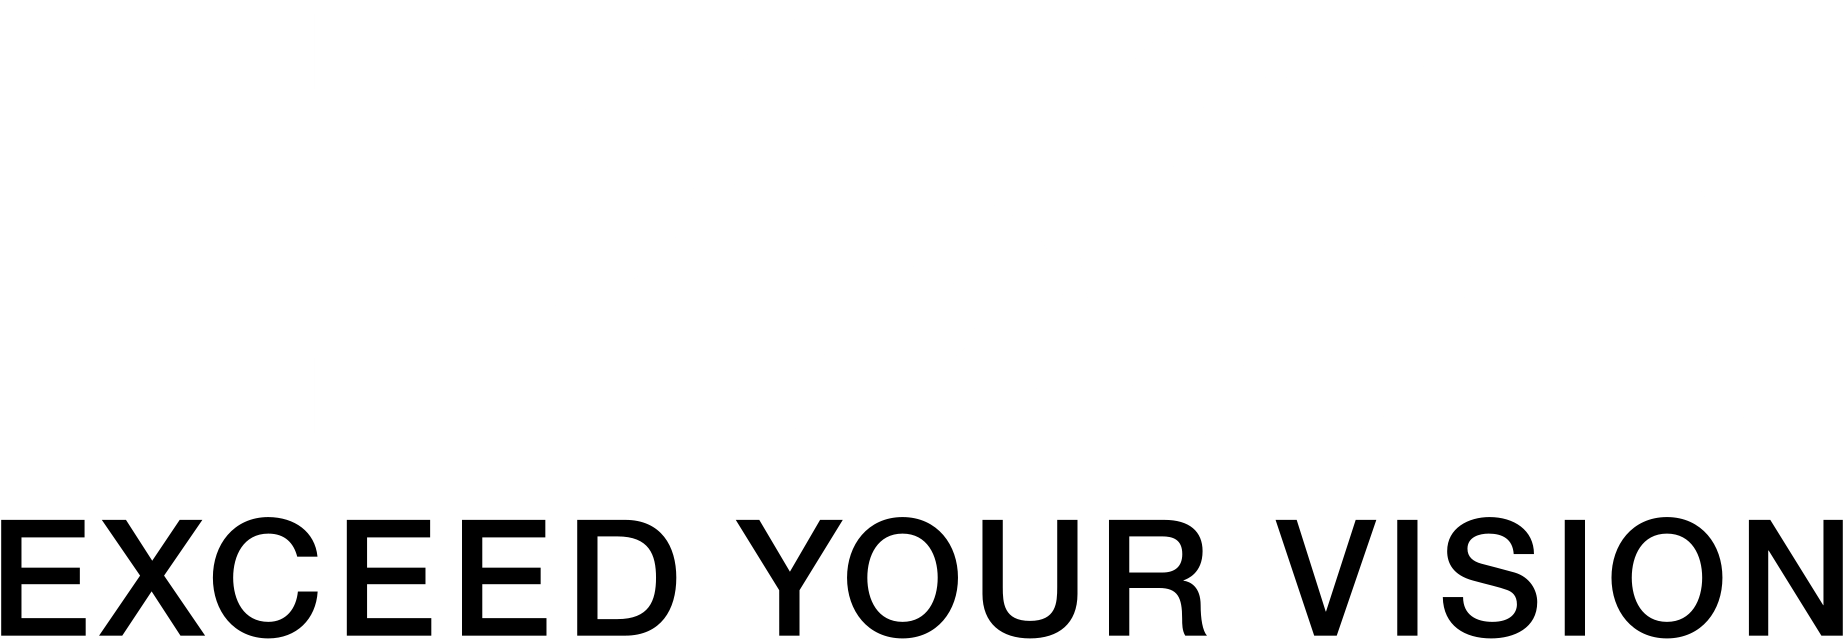 Epson Logo - Pluspng